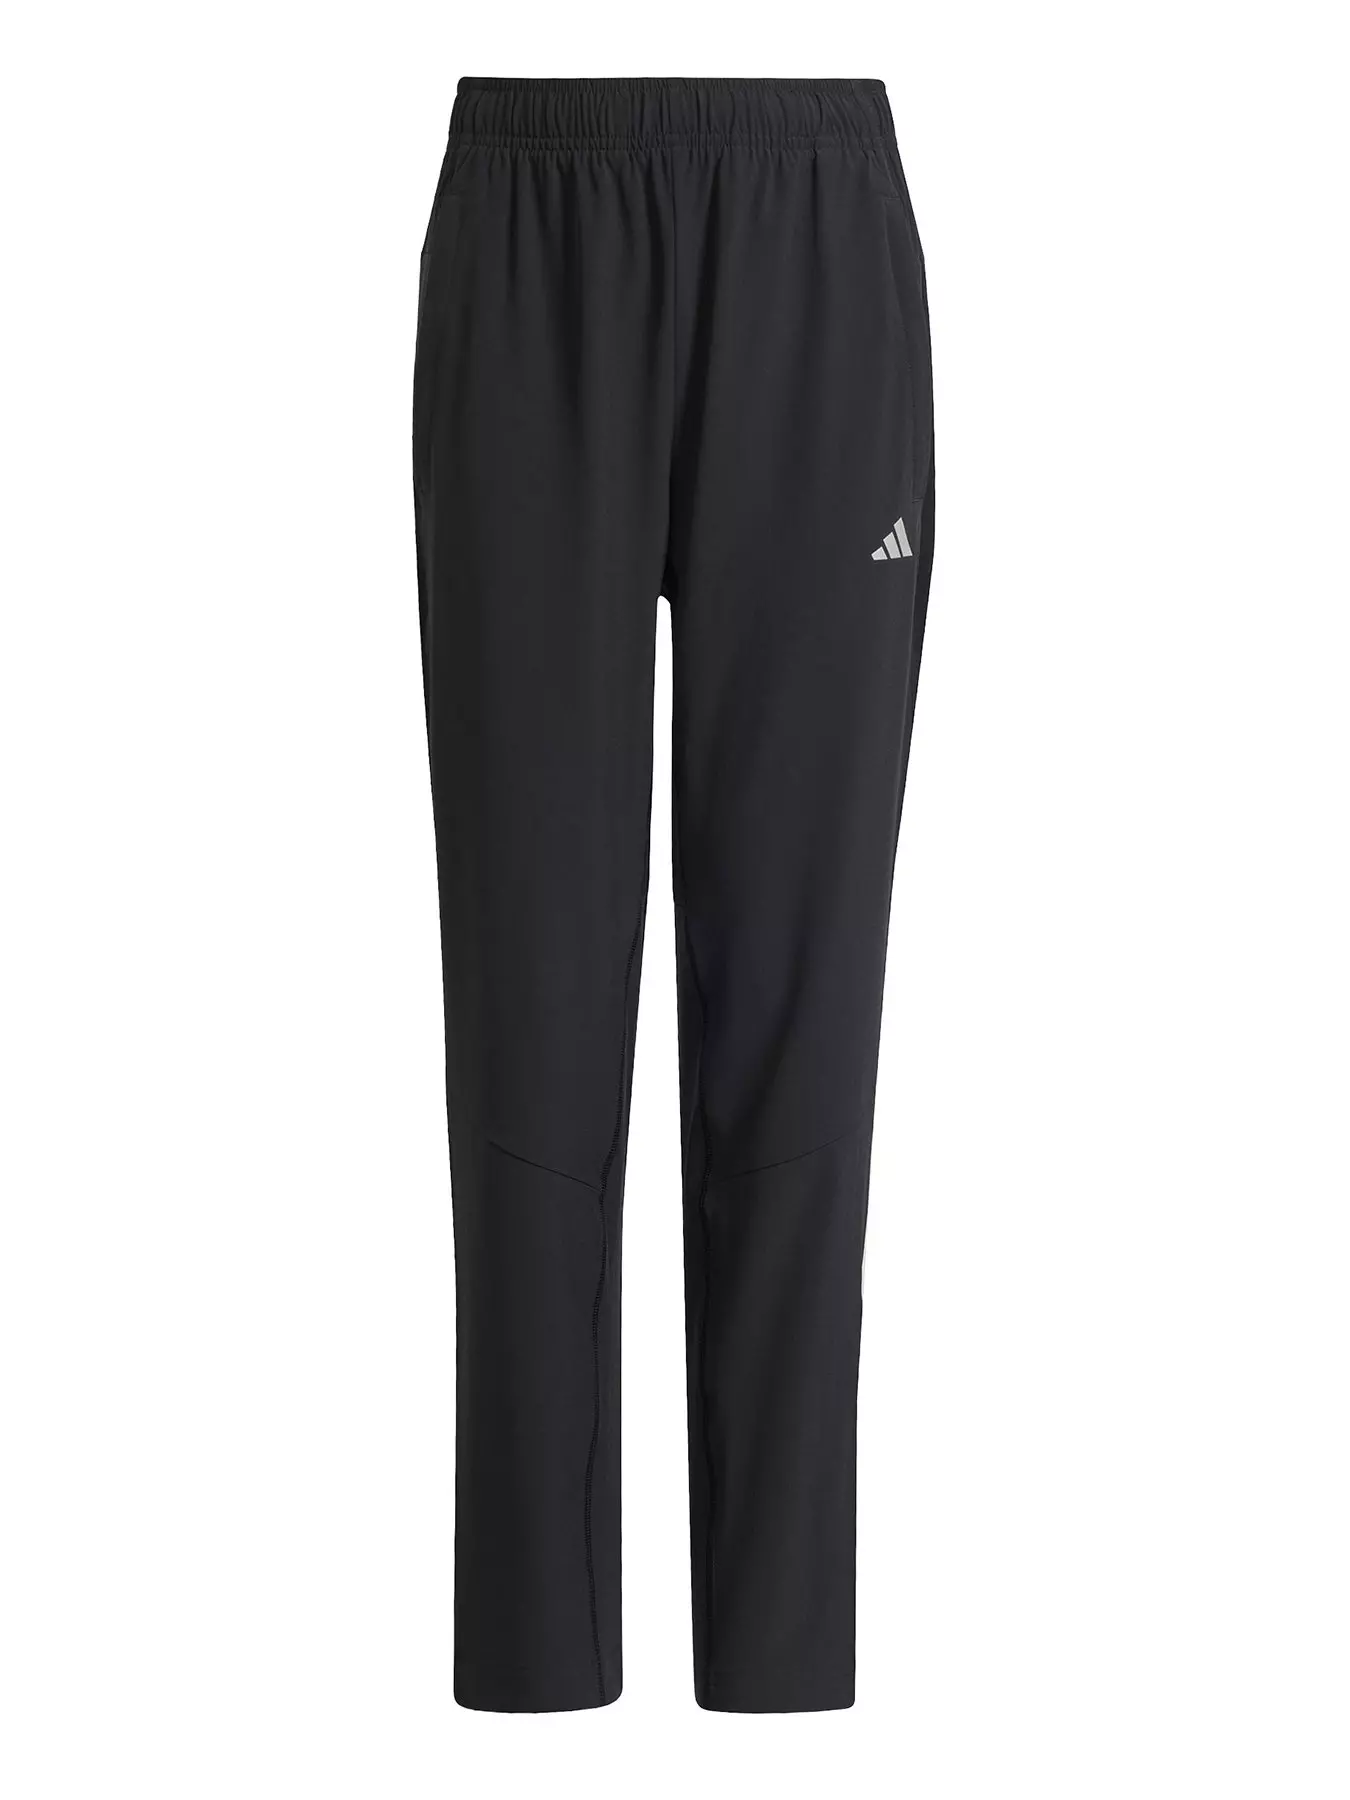 adidas Wrapped 3-Stripes Snap Pants (Plus Size) - Black | Women's Training  | adidas US